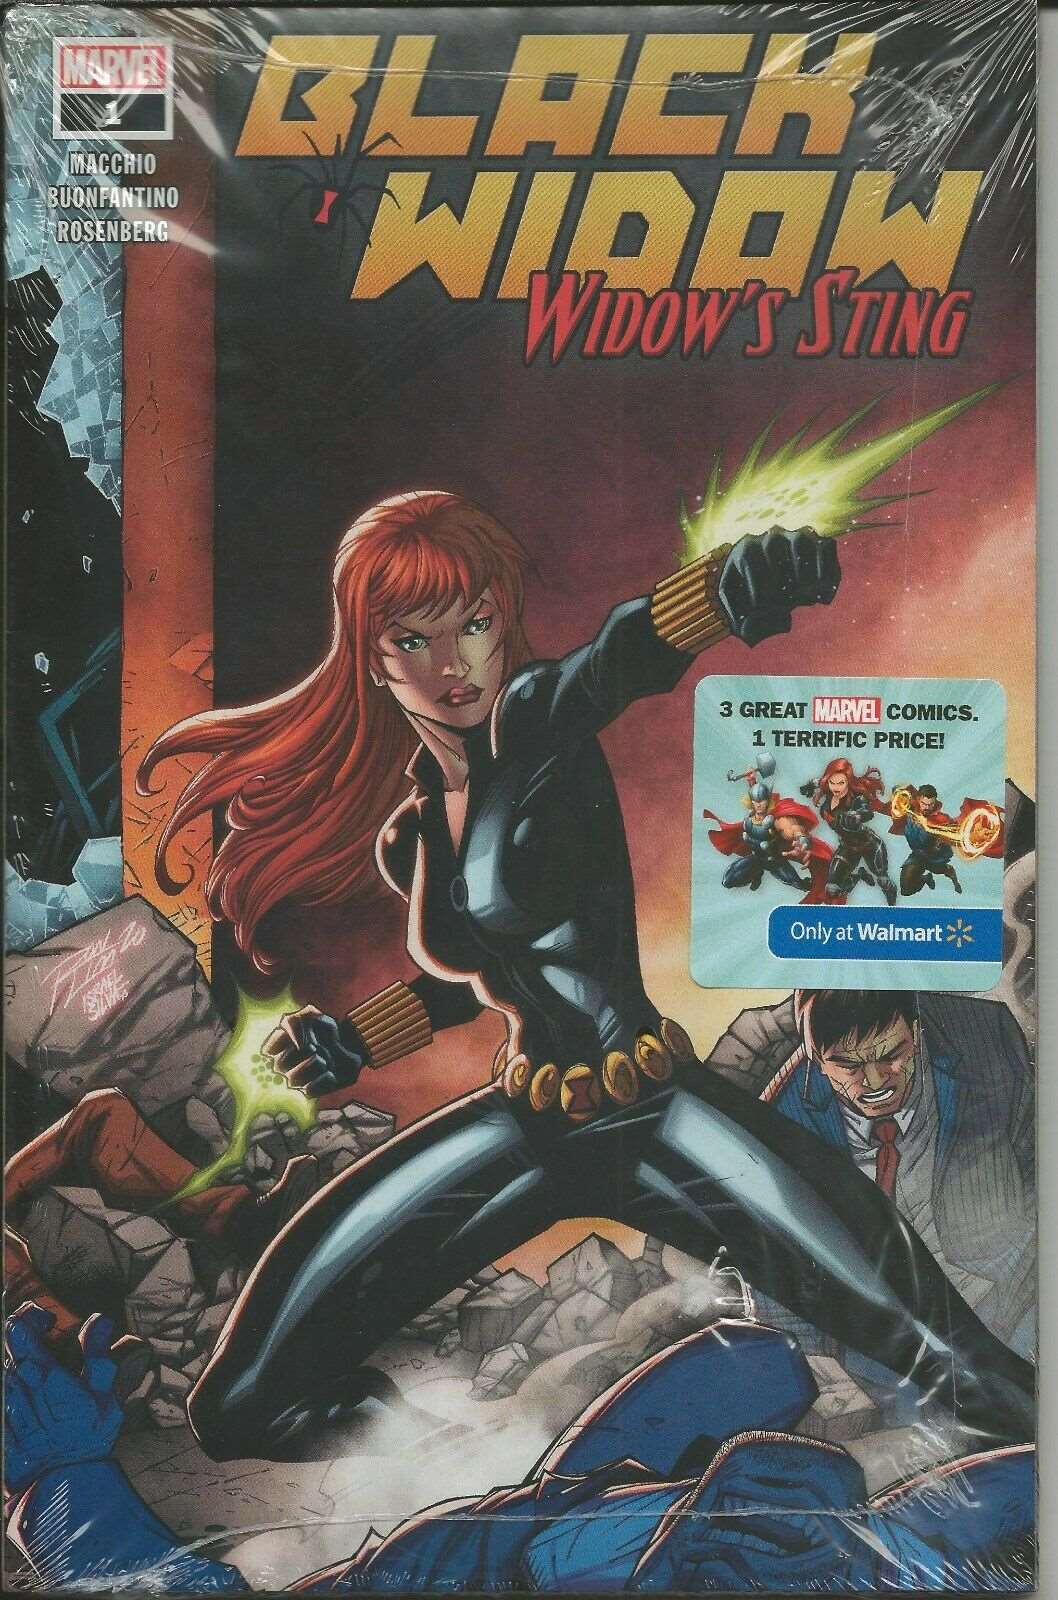 marvel comics black widow: widows sting issue 1 walmart comic 3 pack